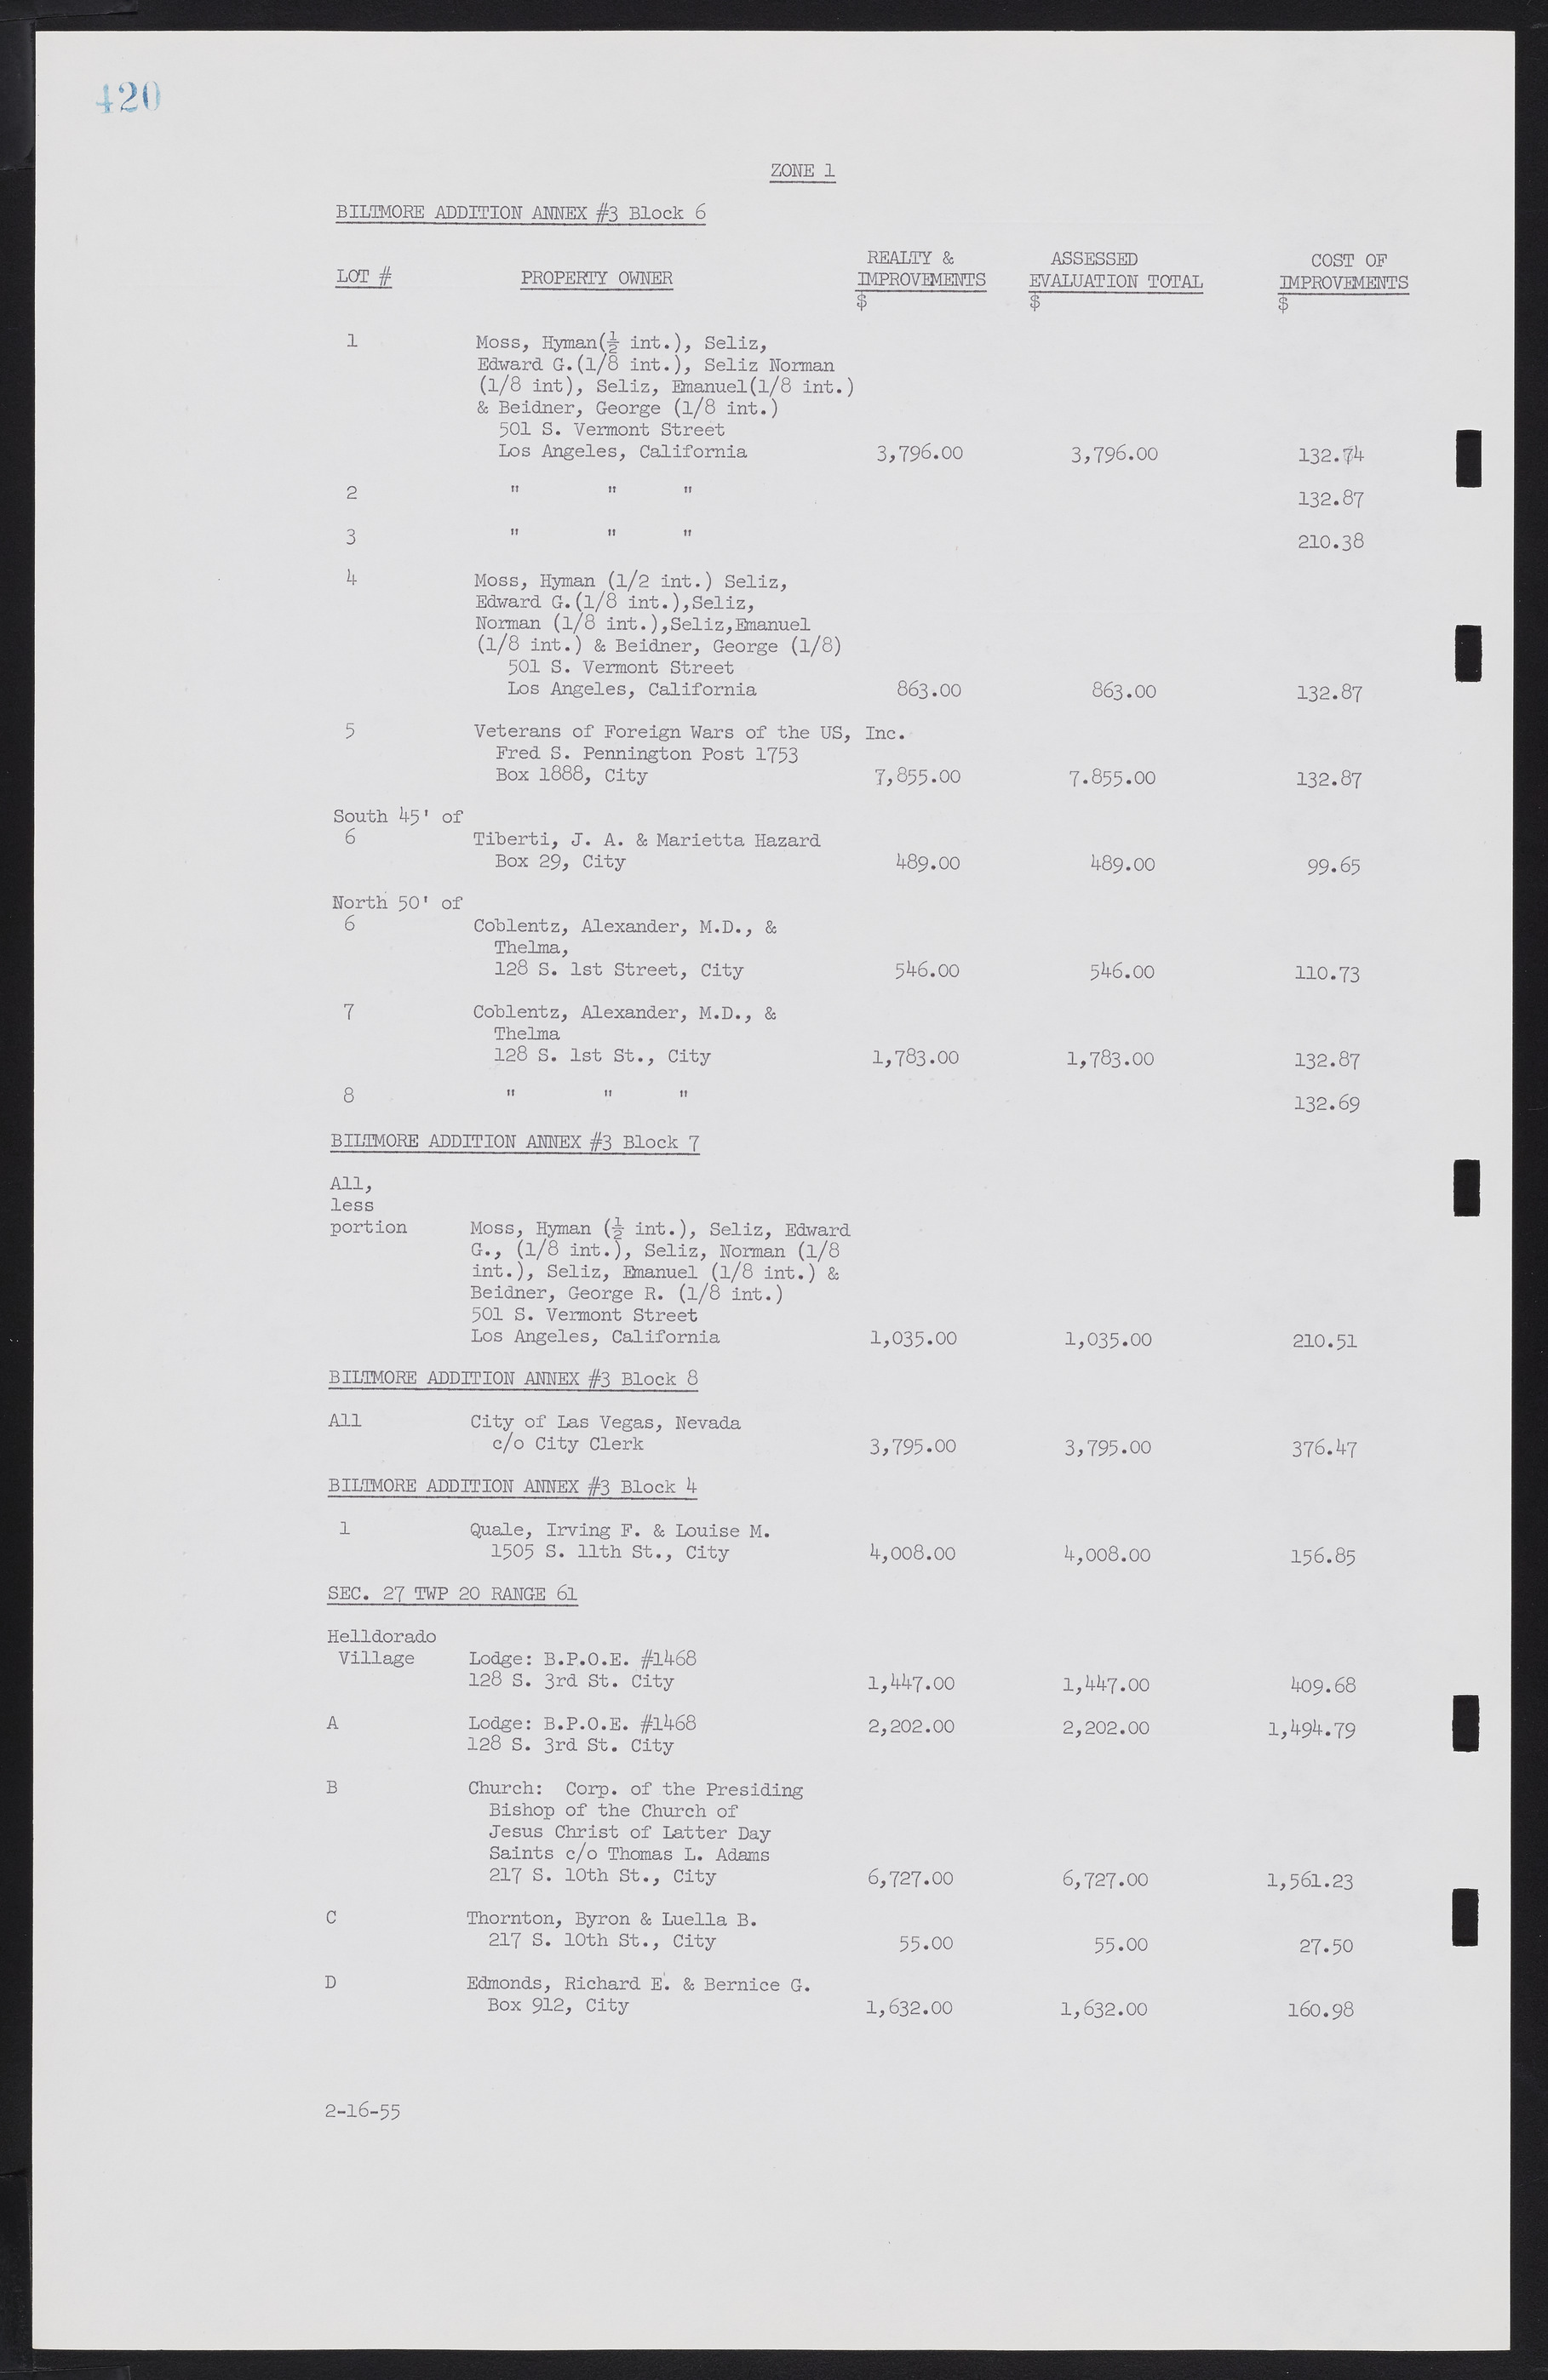 Las Vegas City Commission Minutes, February 17, 1954 to September 21, 1955, lvc000009-426